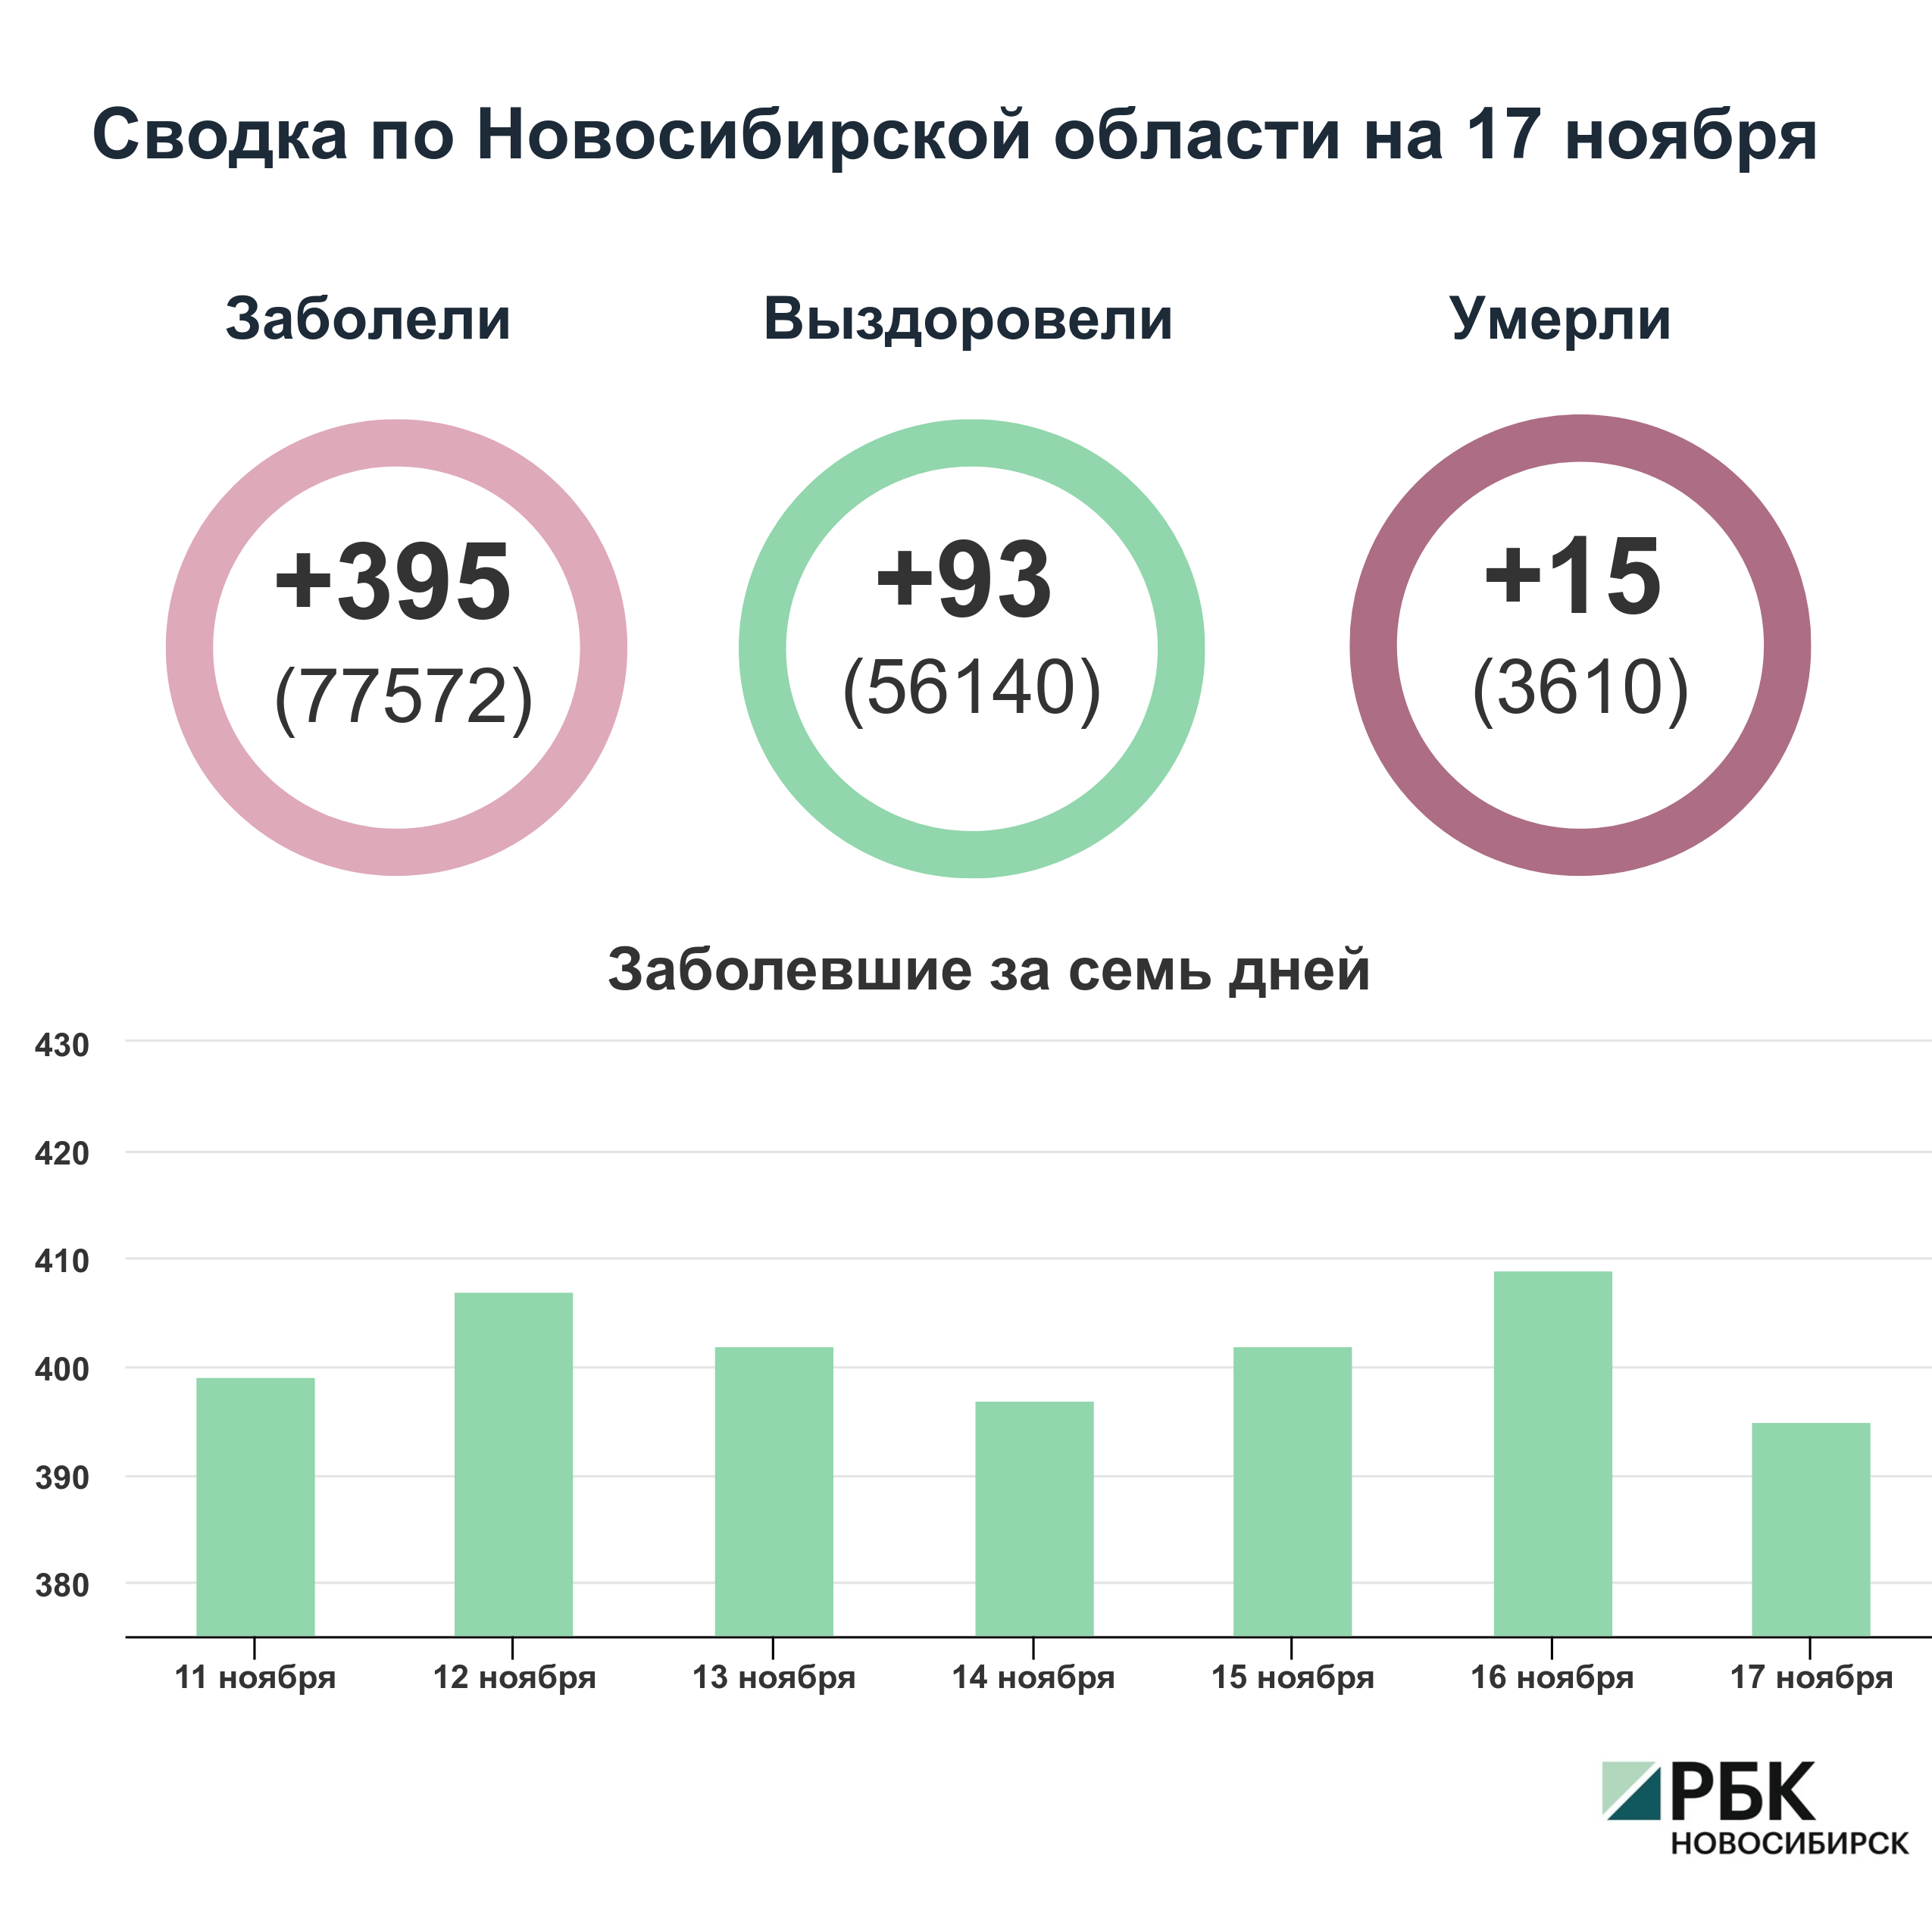 Коронавирус в Новосибирске: сводка на 17 ноября